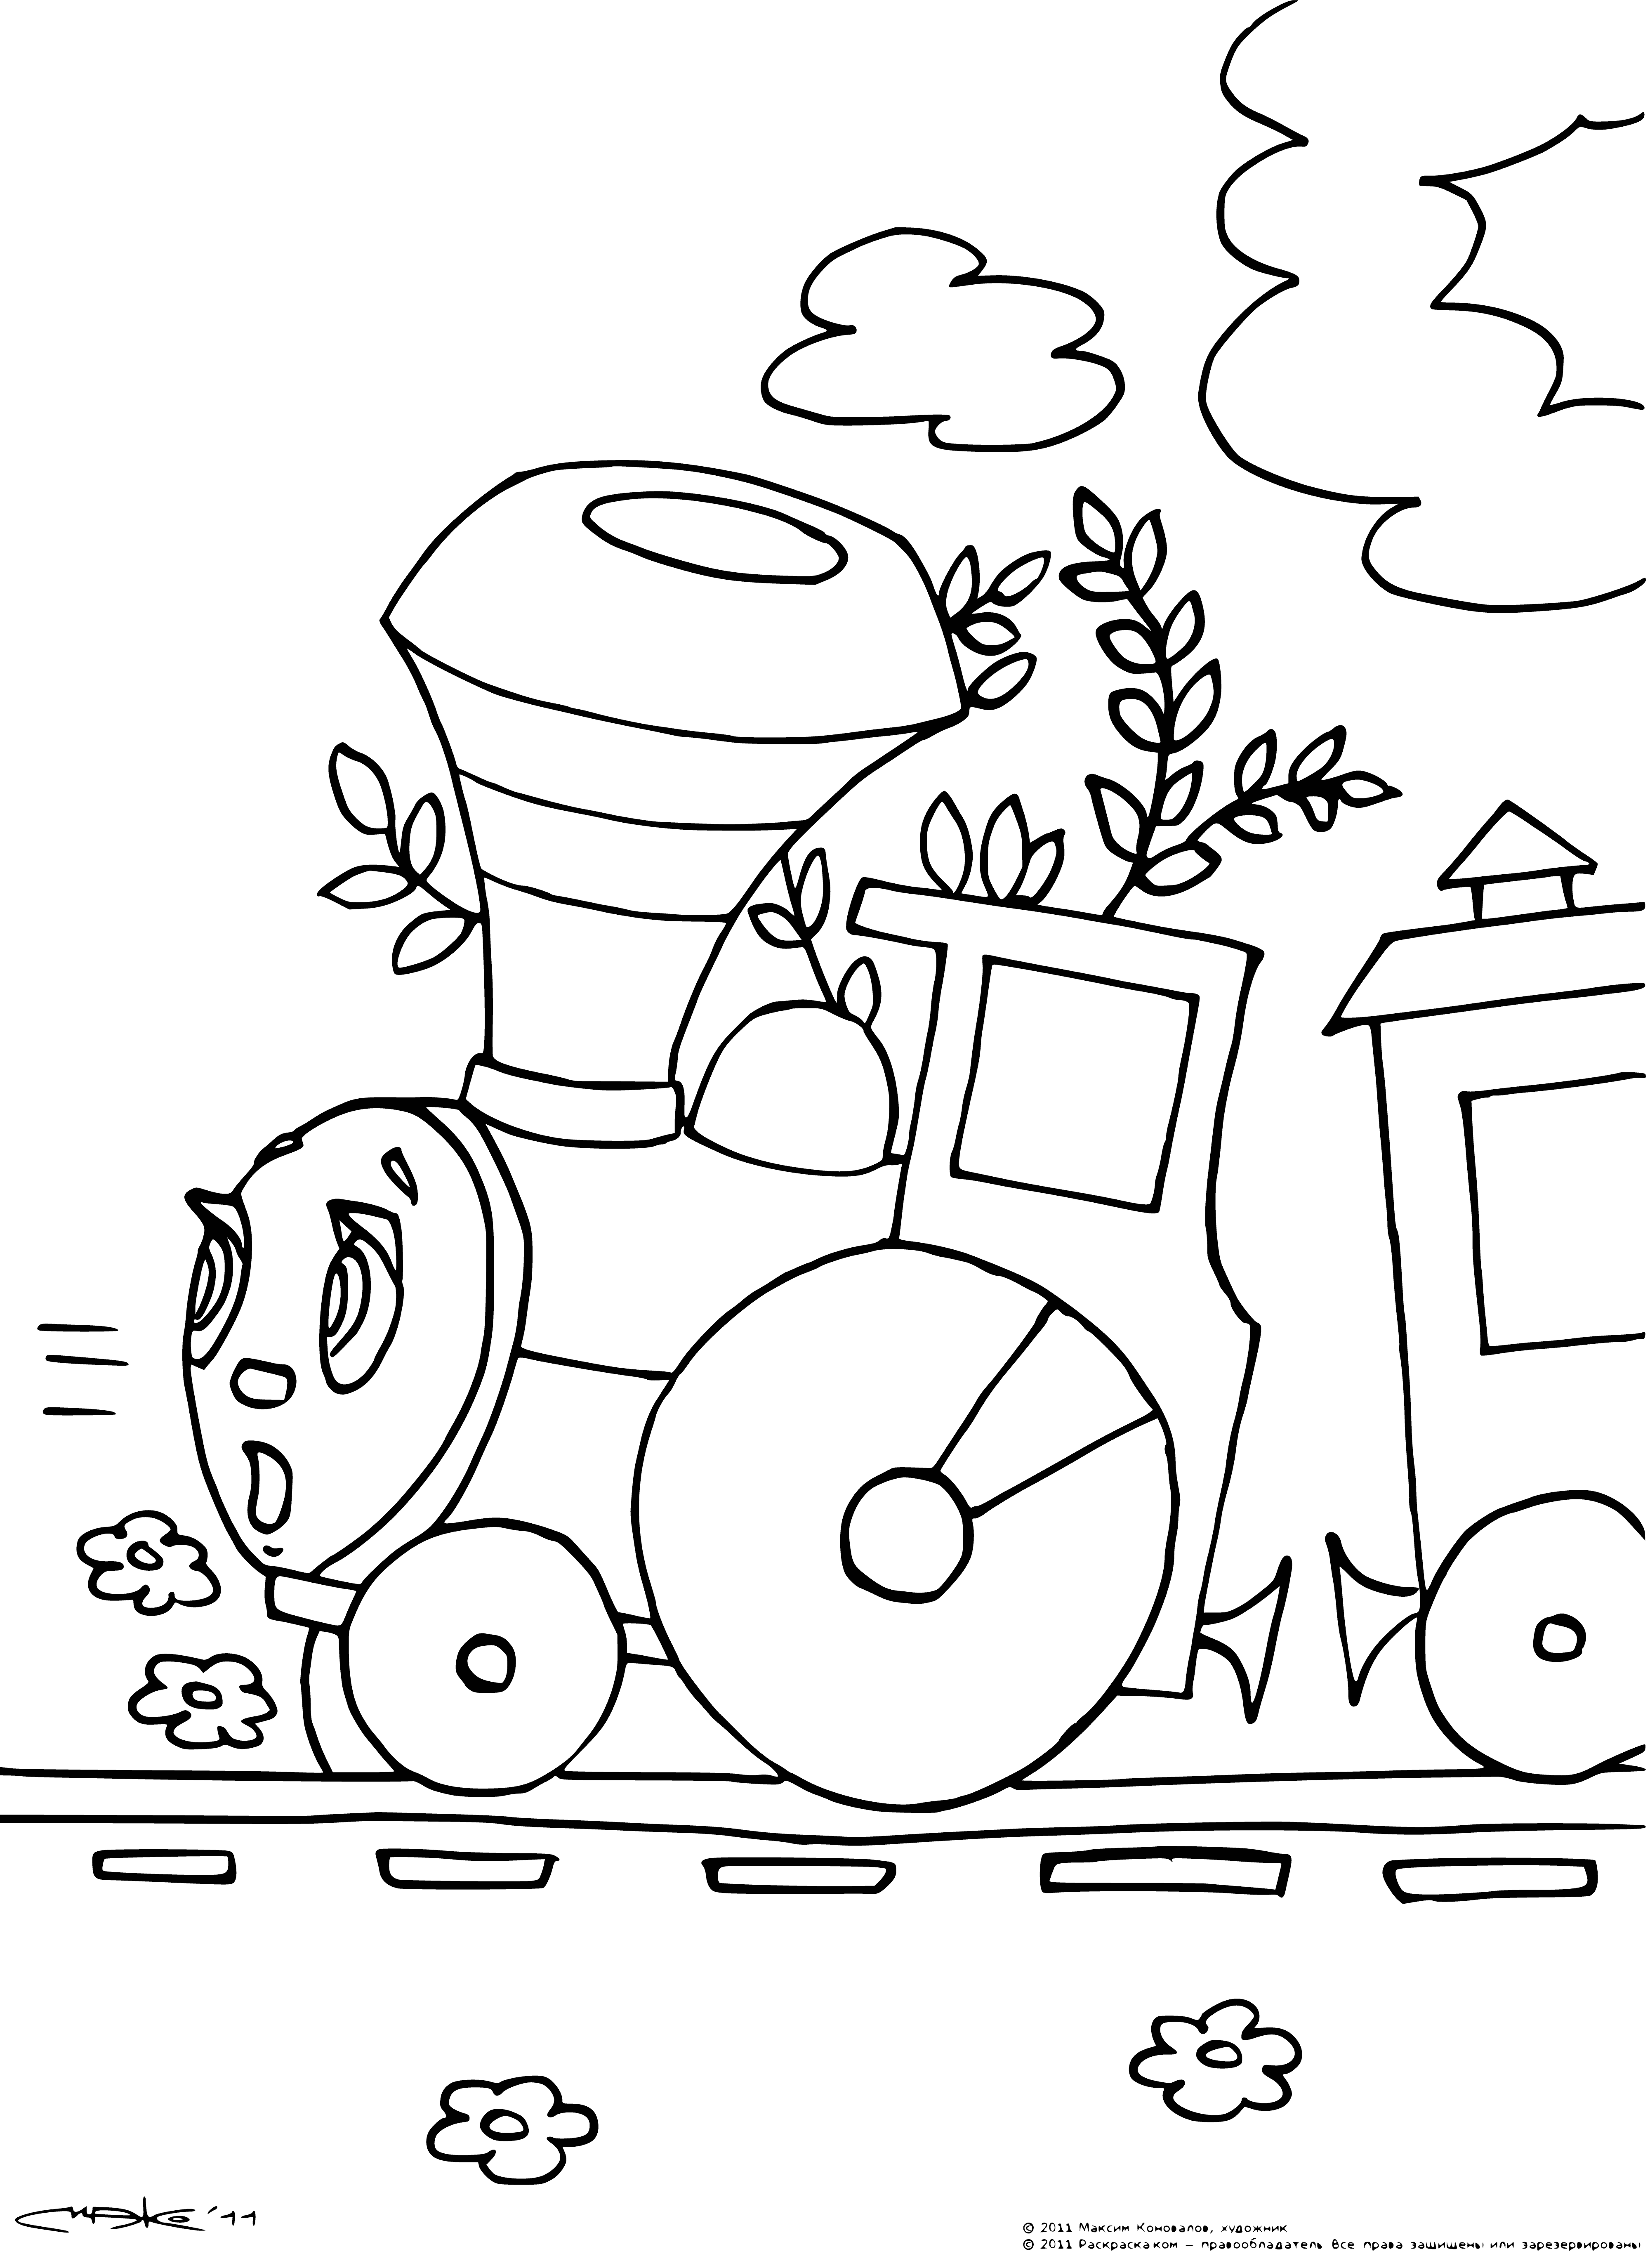 coloring page: Locomotive from Romashkovo, large & black w/ many windows, pulling a large, long train w/ many cars.